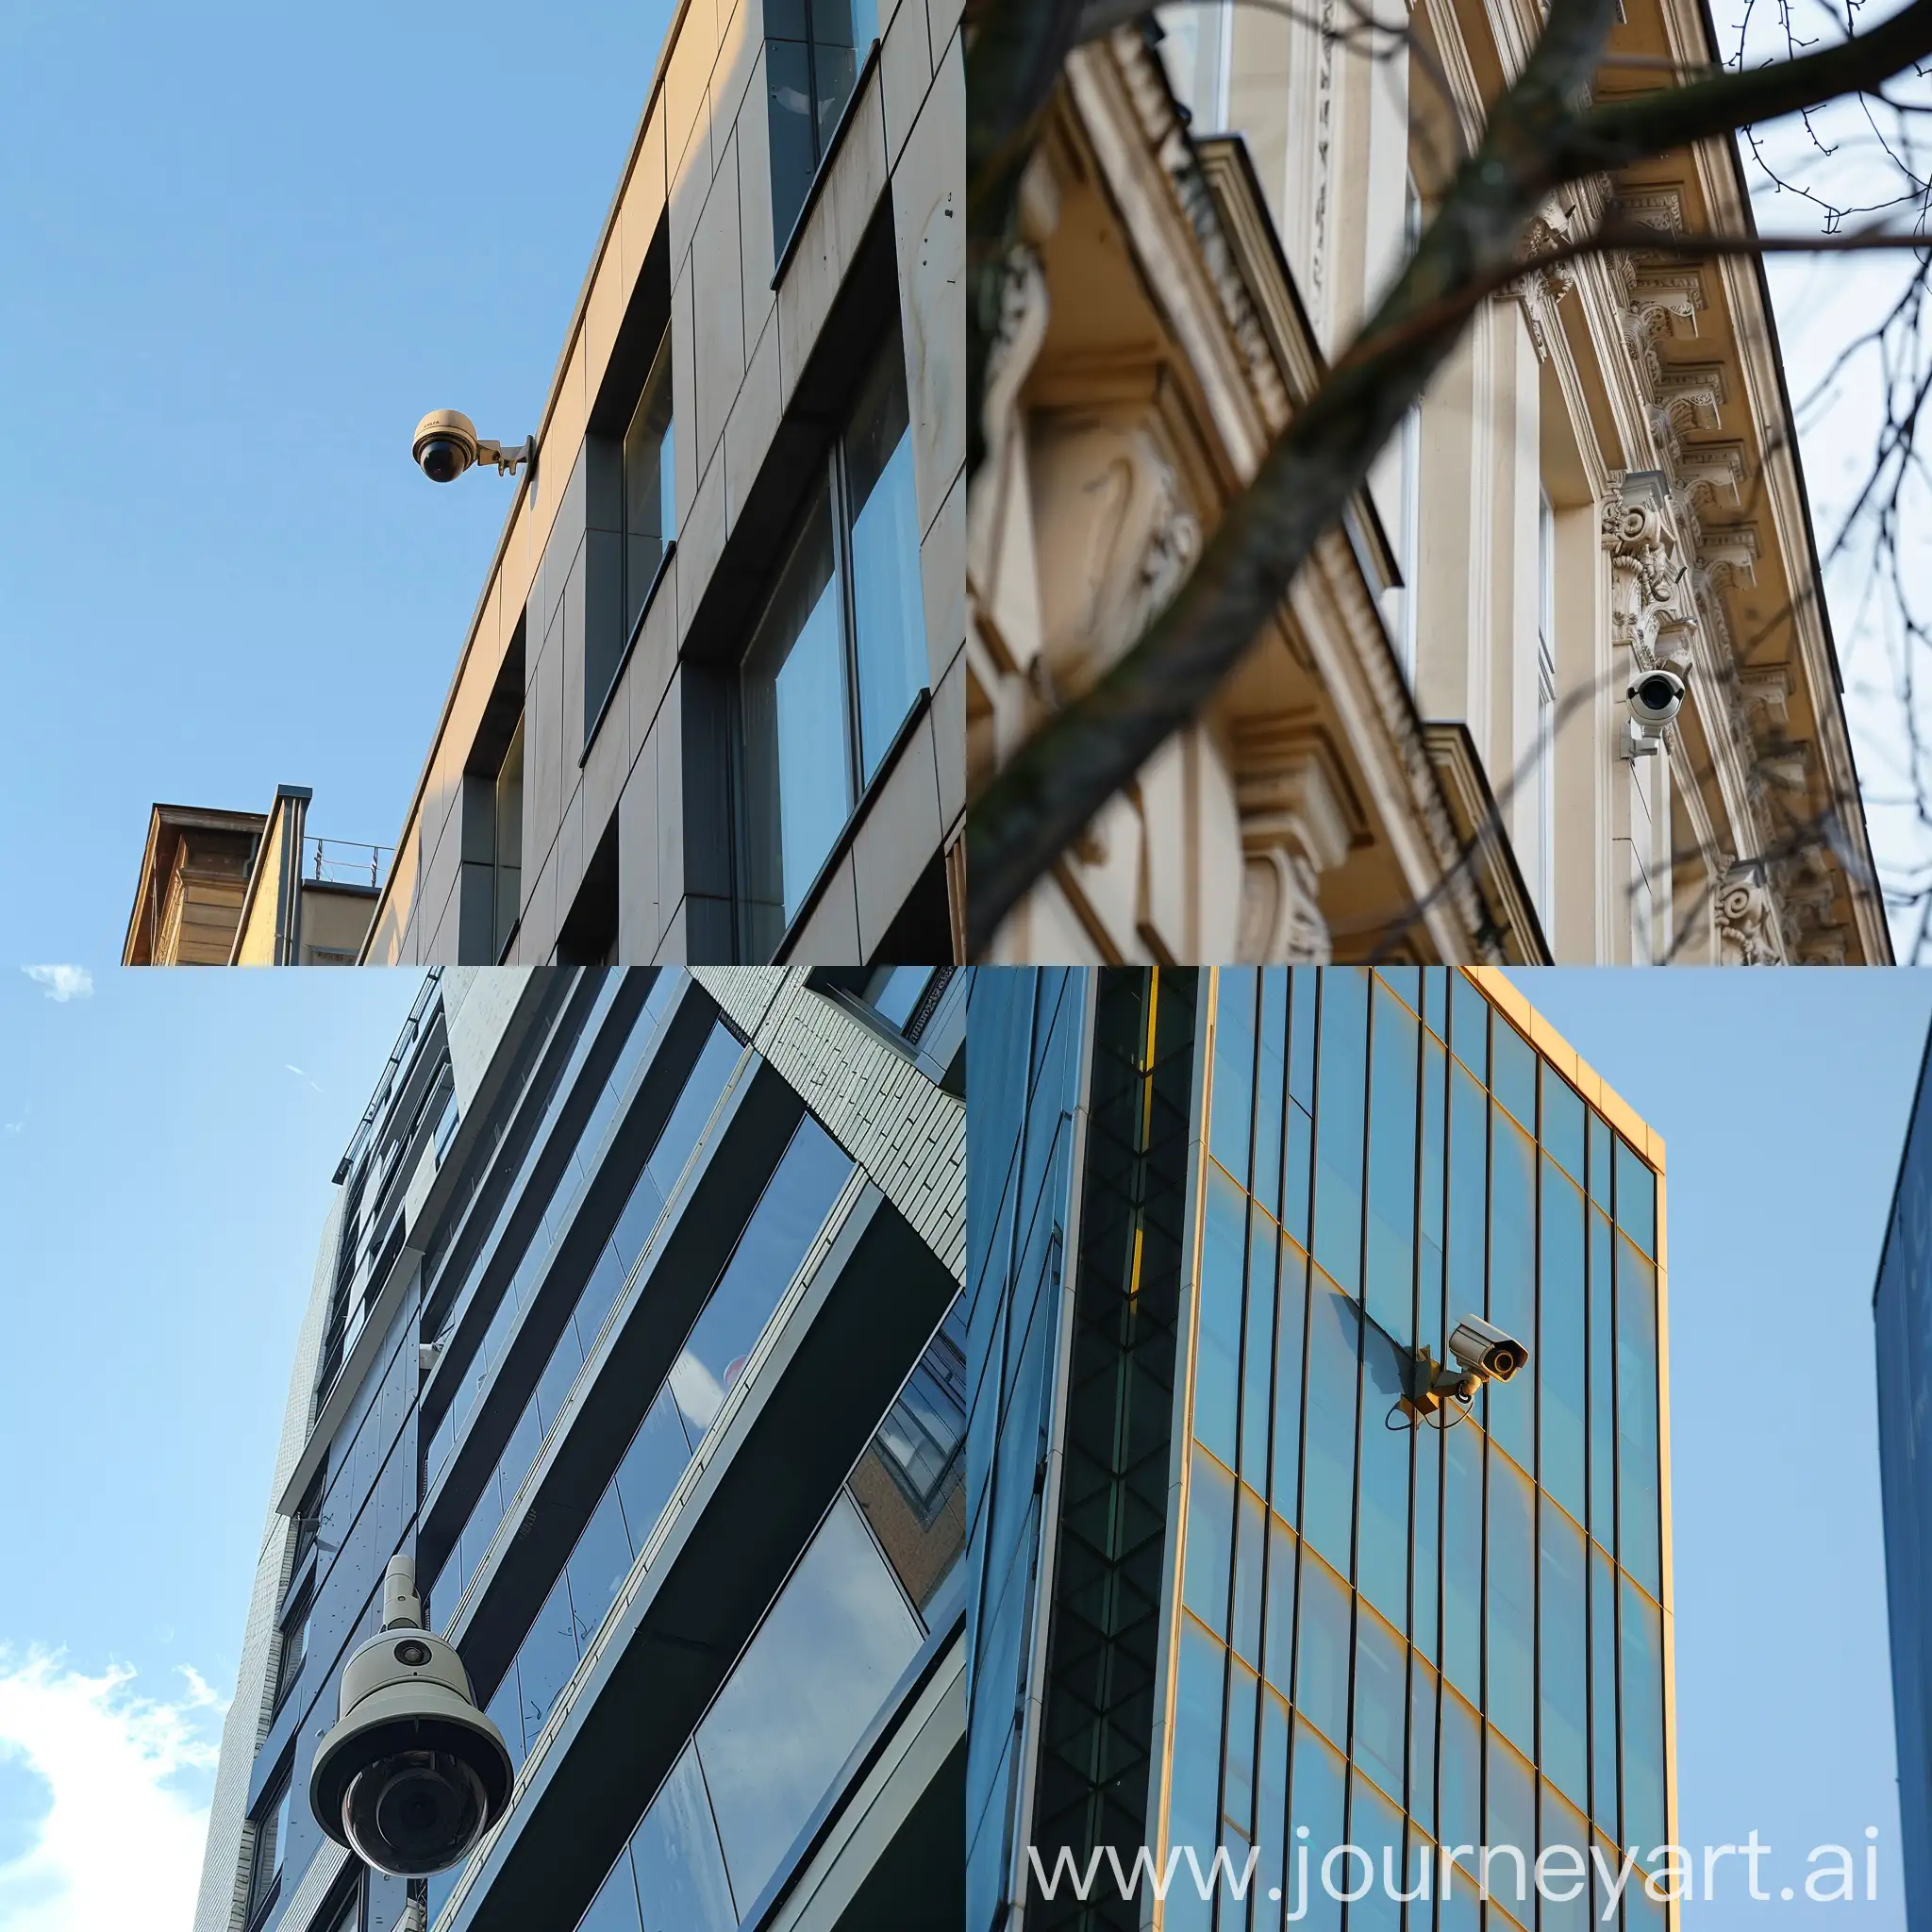 Urban-Surveillance-Video-Camera-on-the-Building